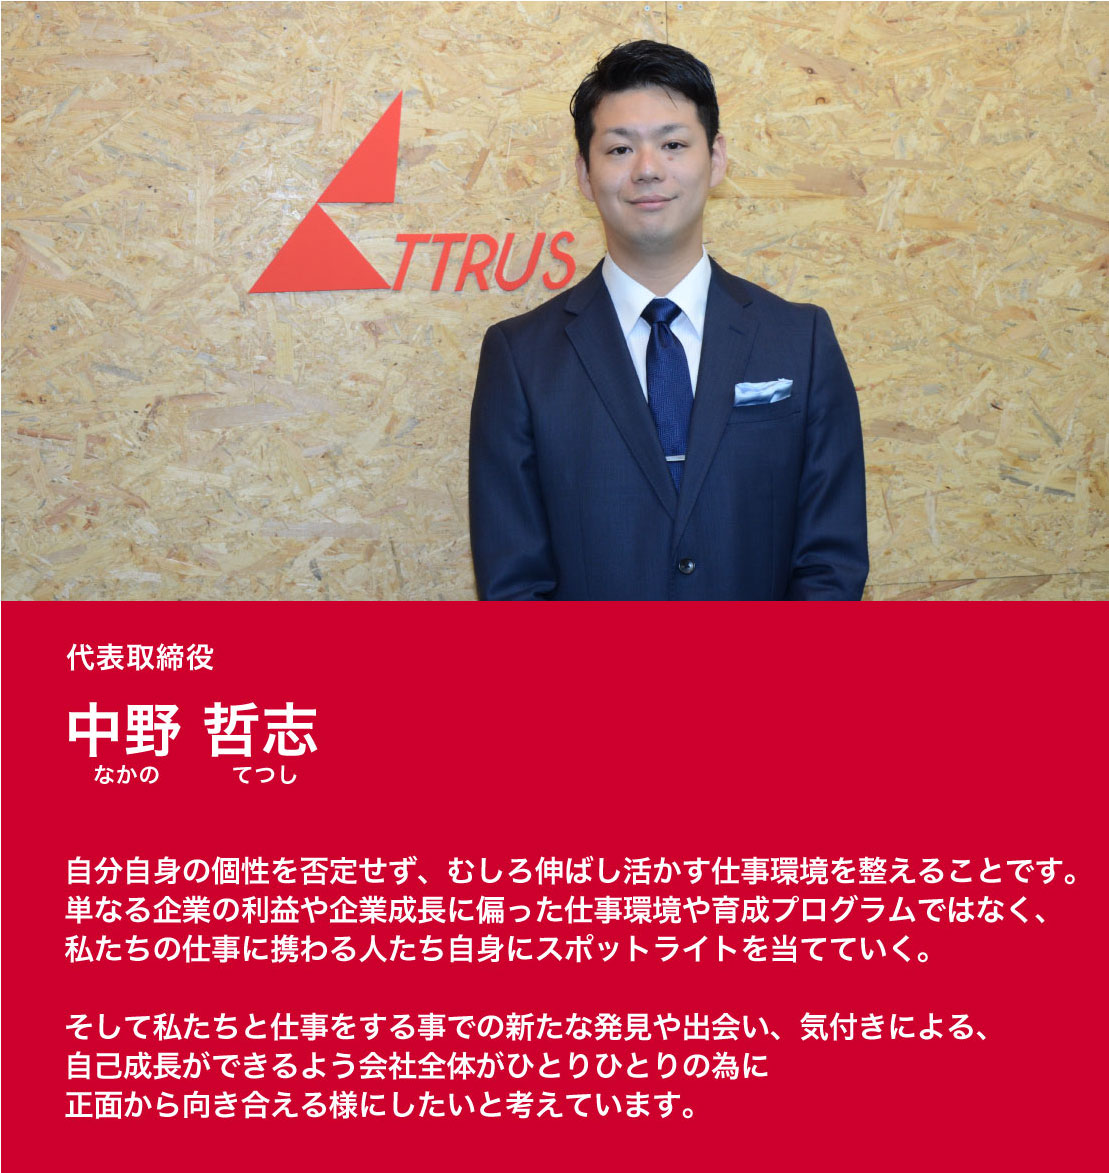 Attrus(アトラス)株式会社 | 採用特設サイト